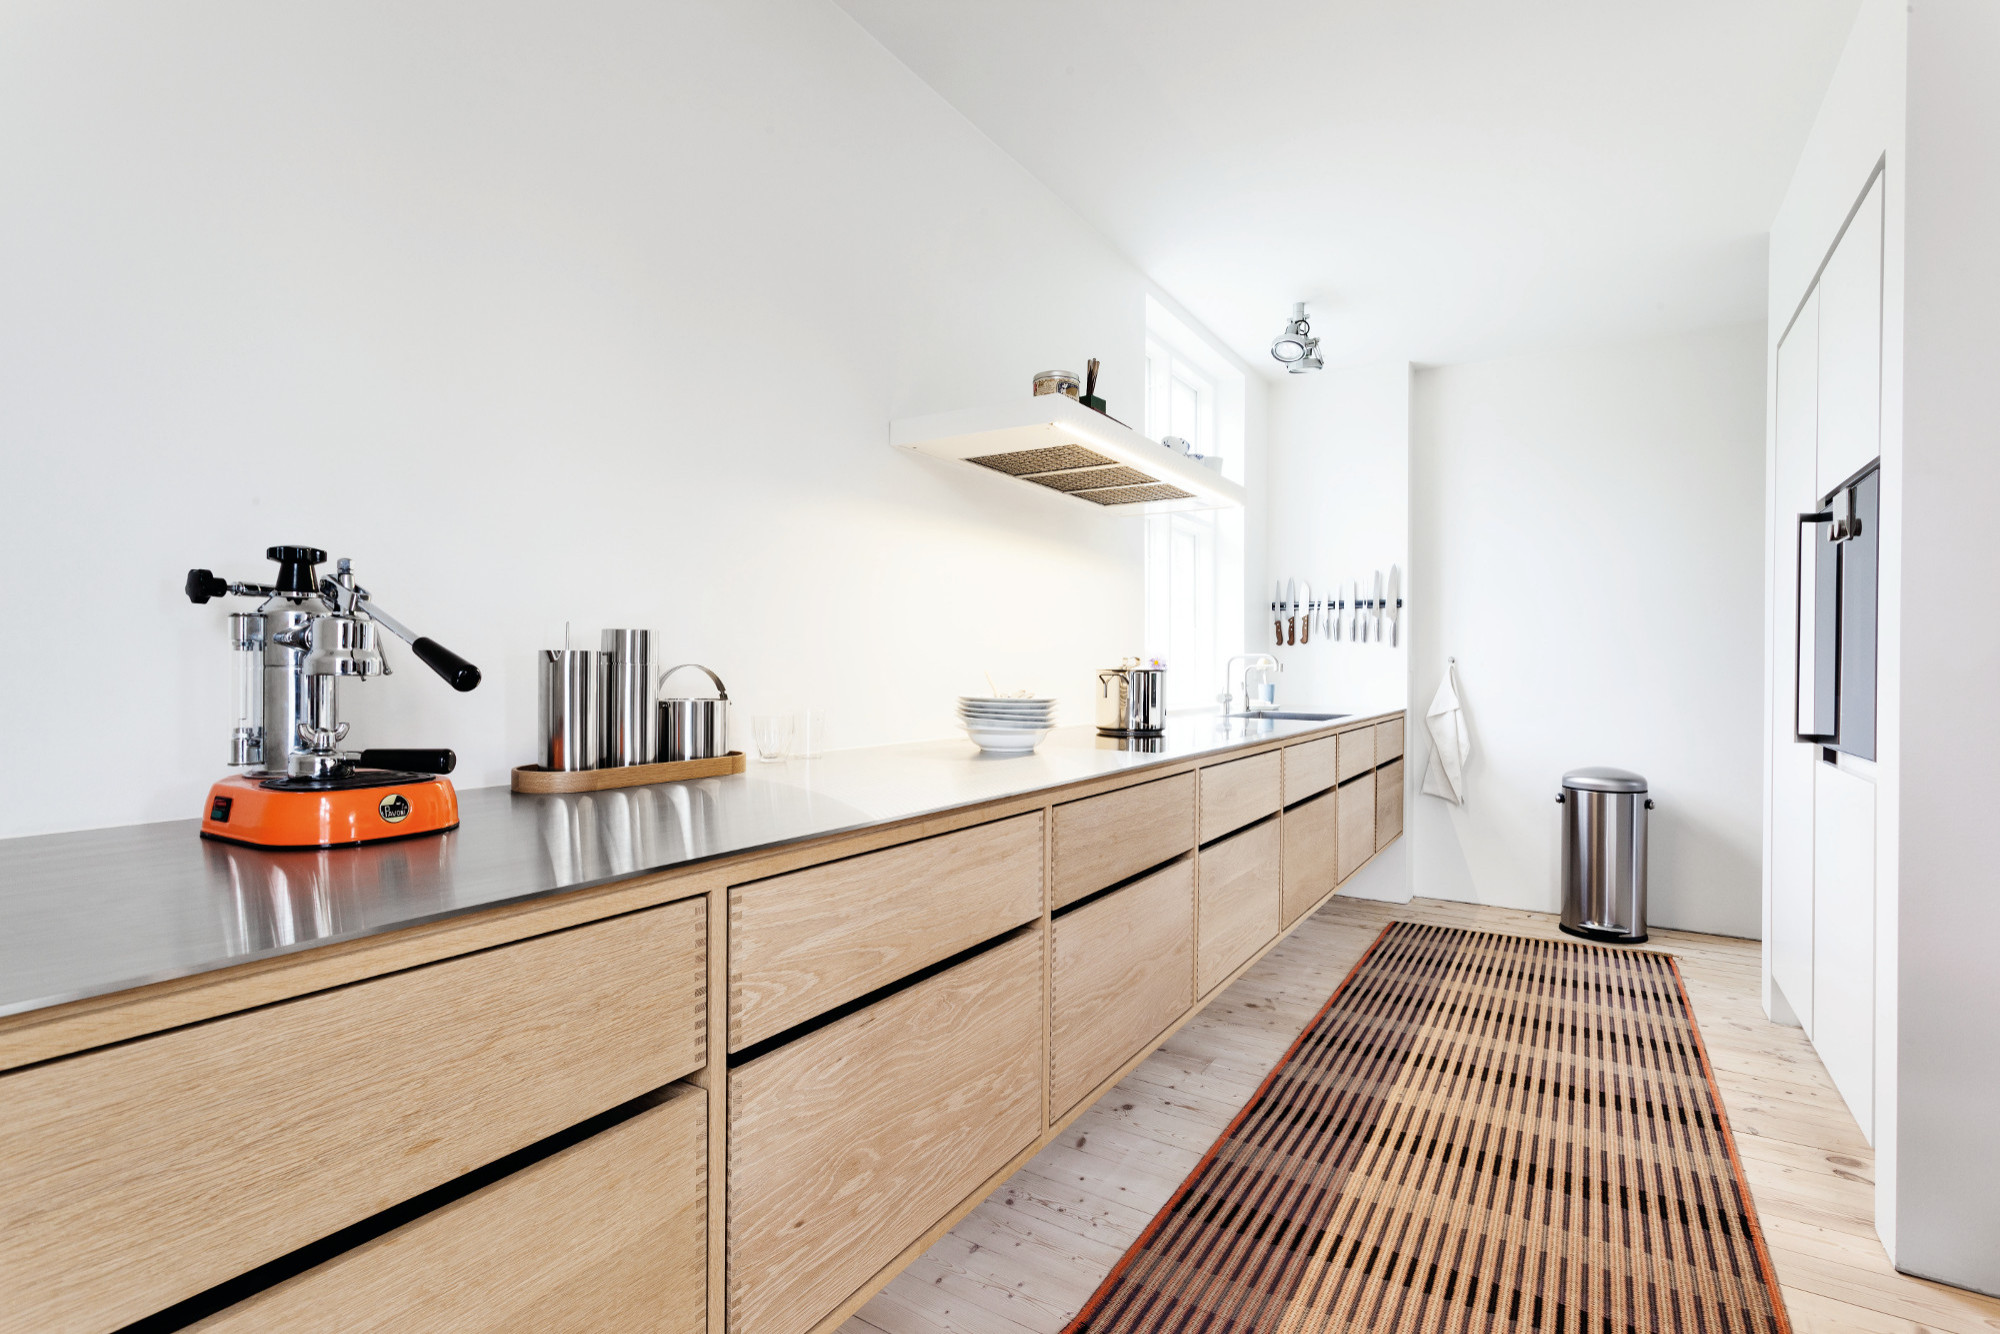 Model Kabinet i egetræ - Scandinavian - Kitchen - Copenhagen - by Garde  Hvalsoe | Houzz